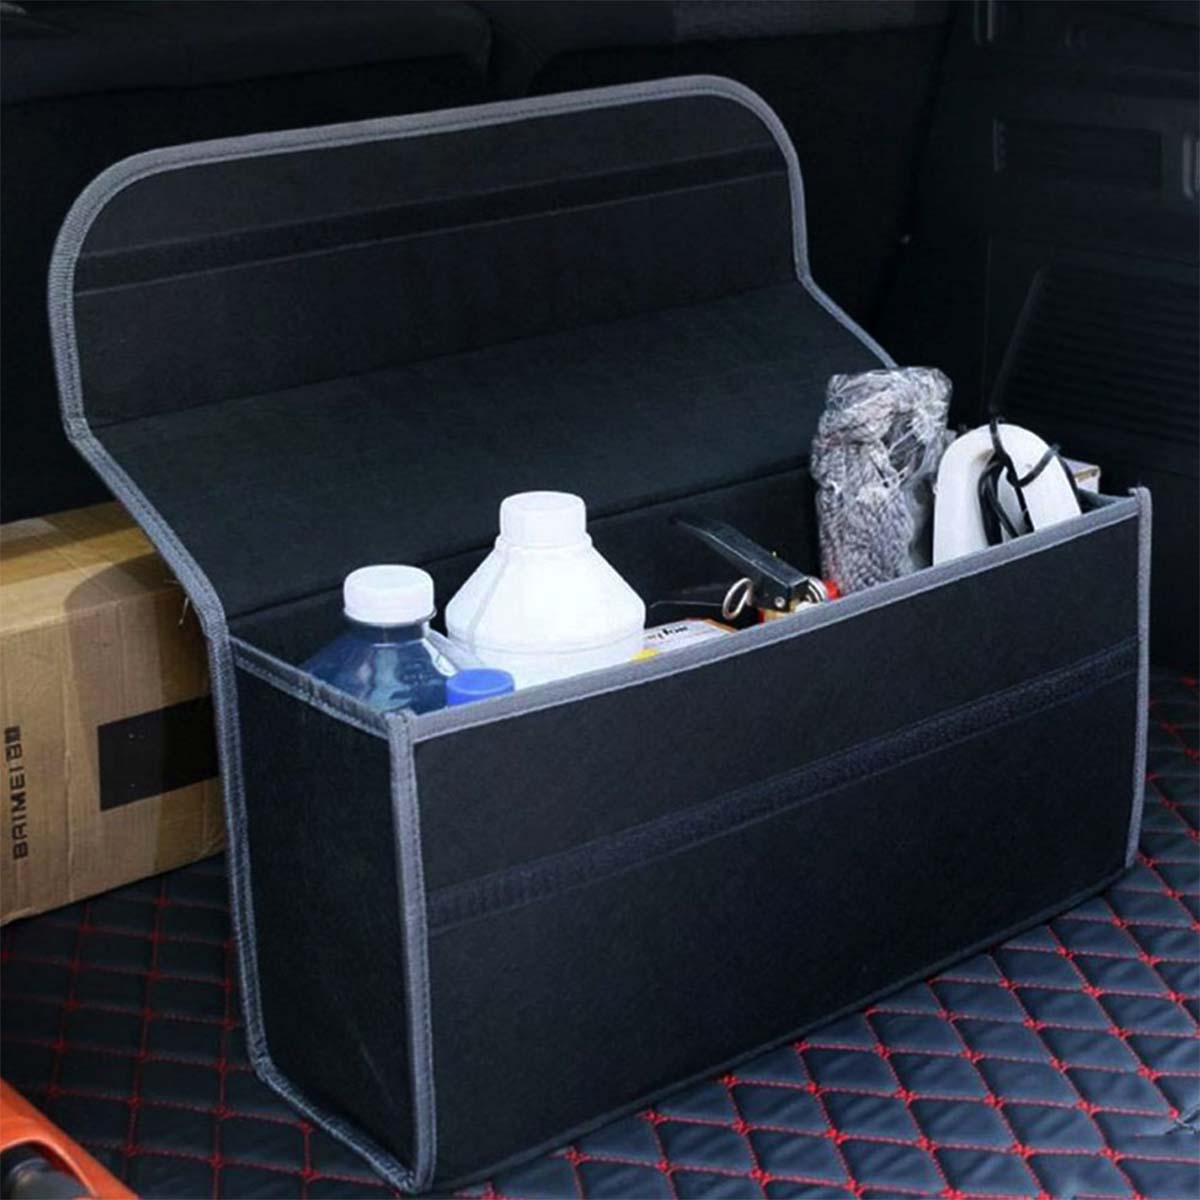 Soft Felt Car Bag Organizer Folding Car Storage Box Non Slip Fireproof Car Trunk Organizer, Custom For Your Cars, Car Accessories LR12990